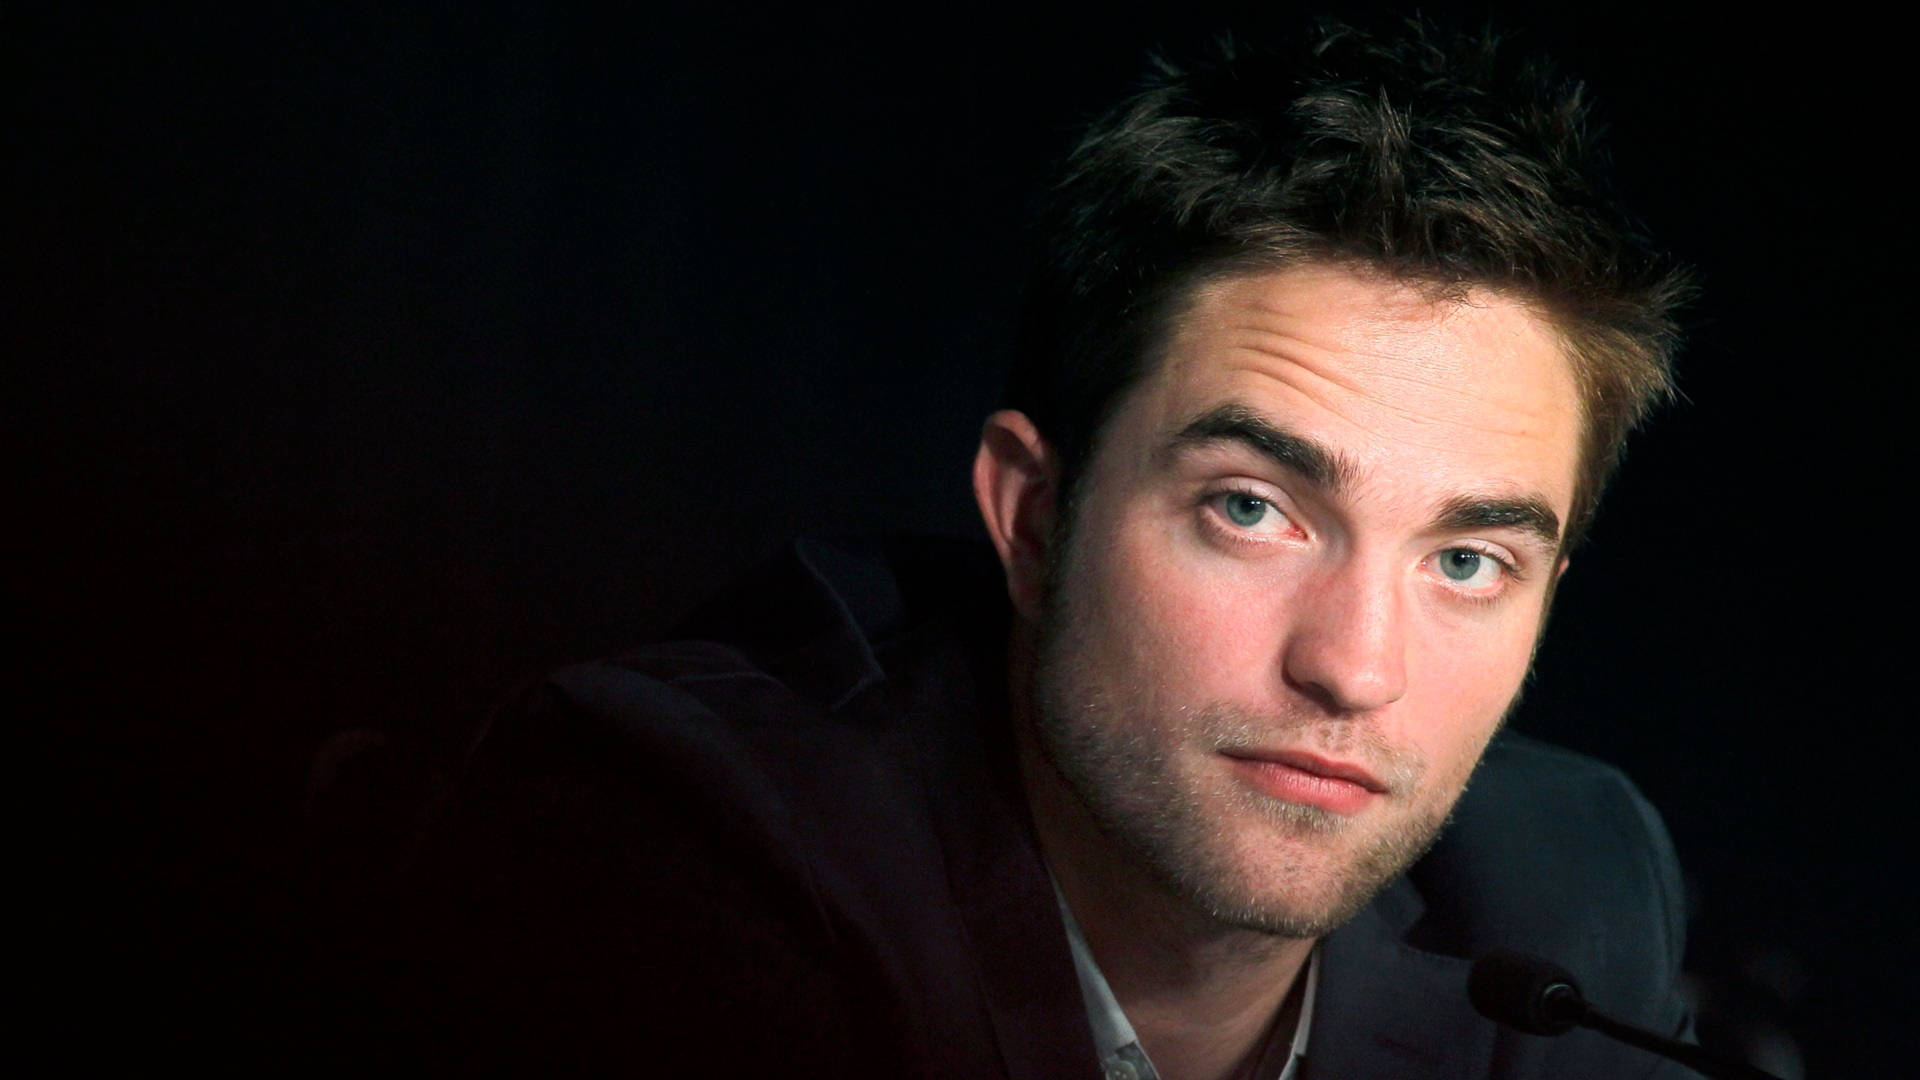 Twilightschauspieler Robert Pattinson Wallpaper